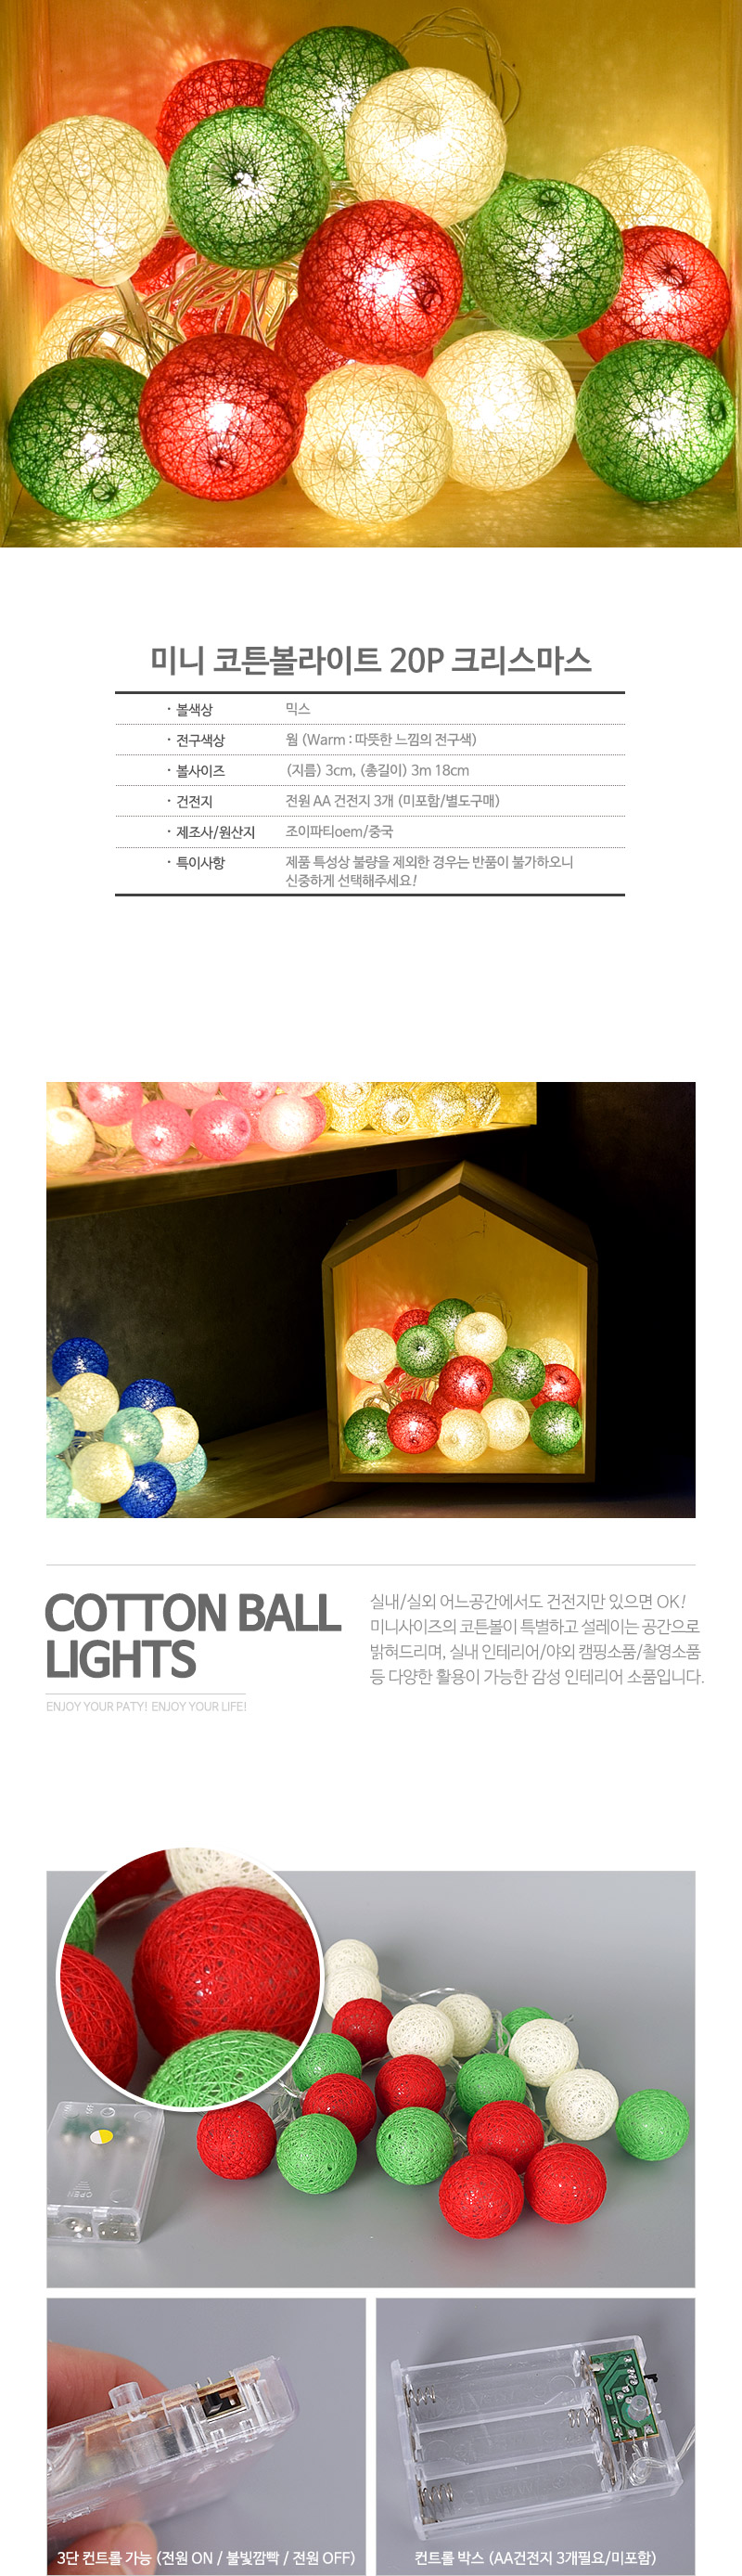 mini_cottonball20p_Christmas_roll.jpg